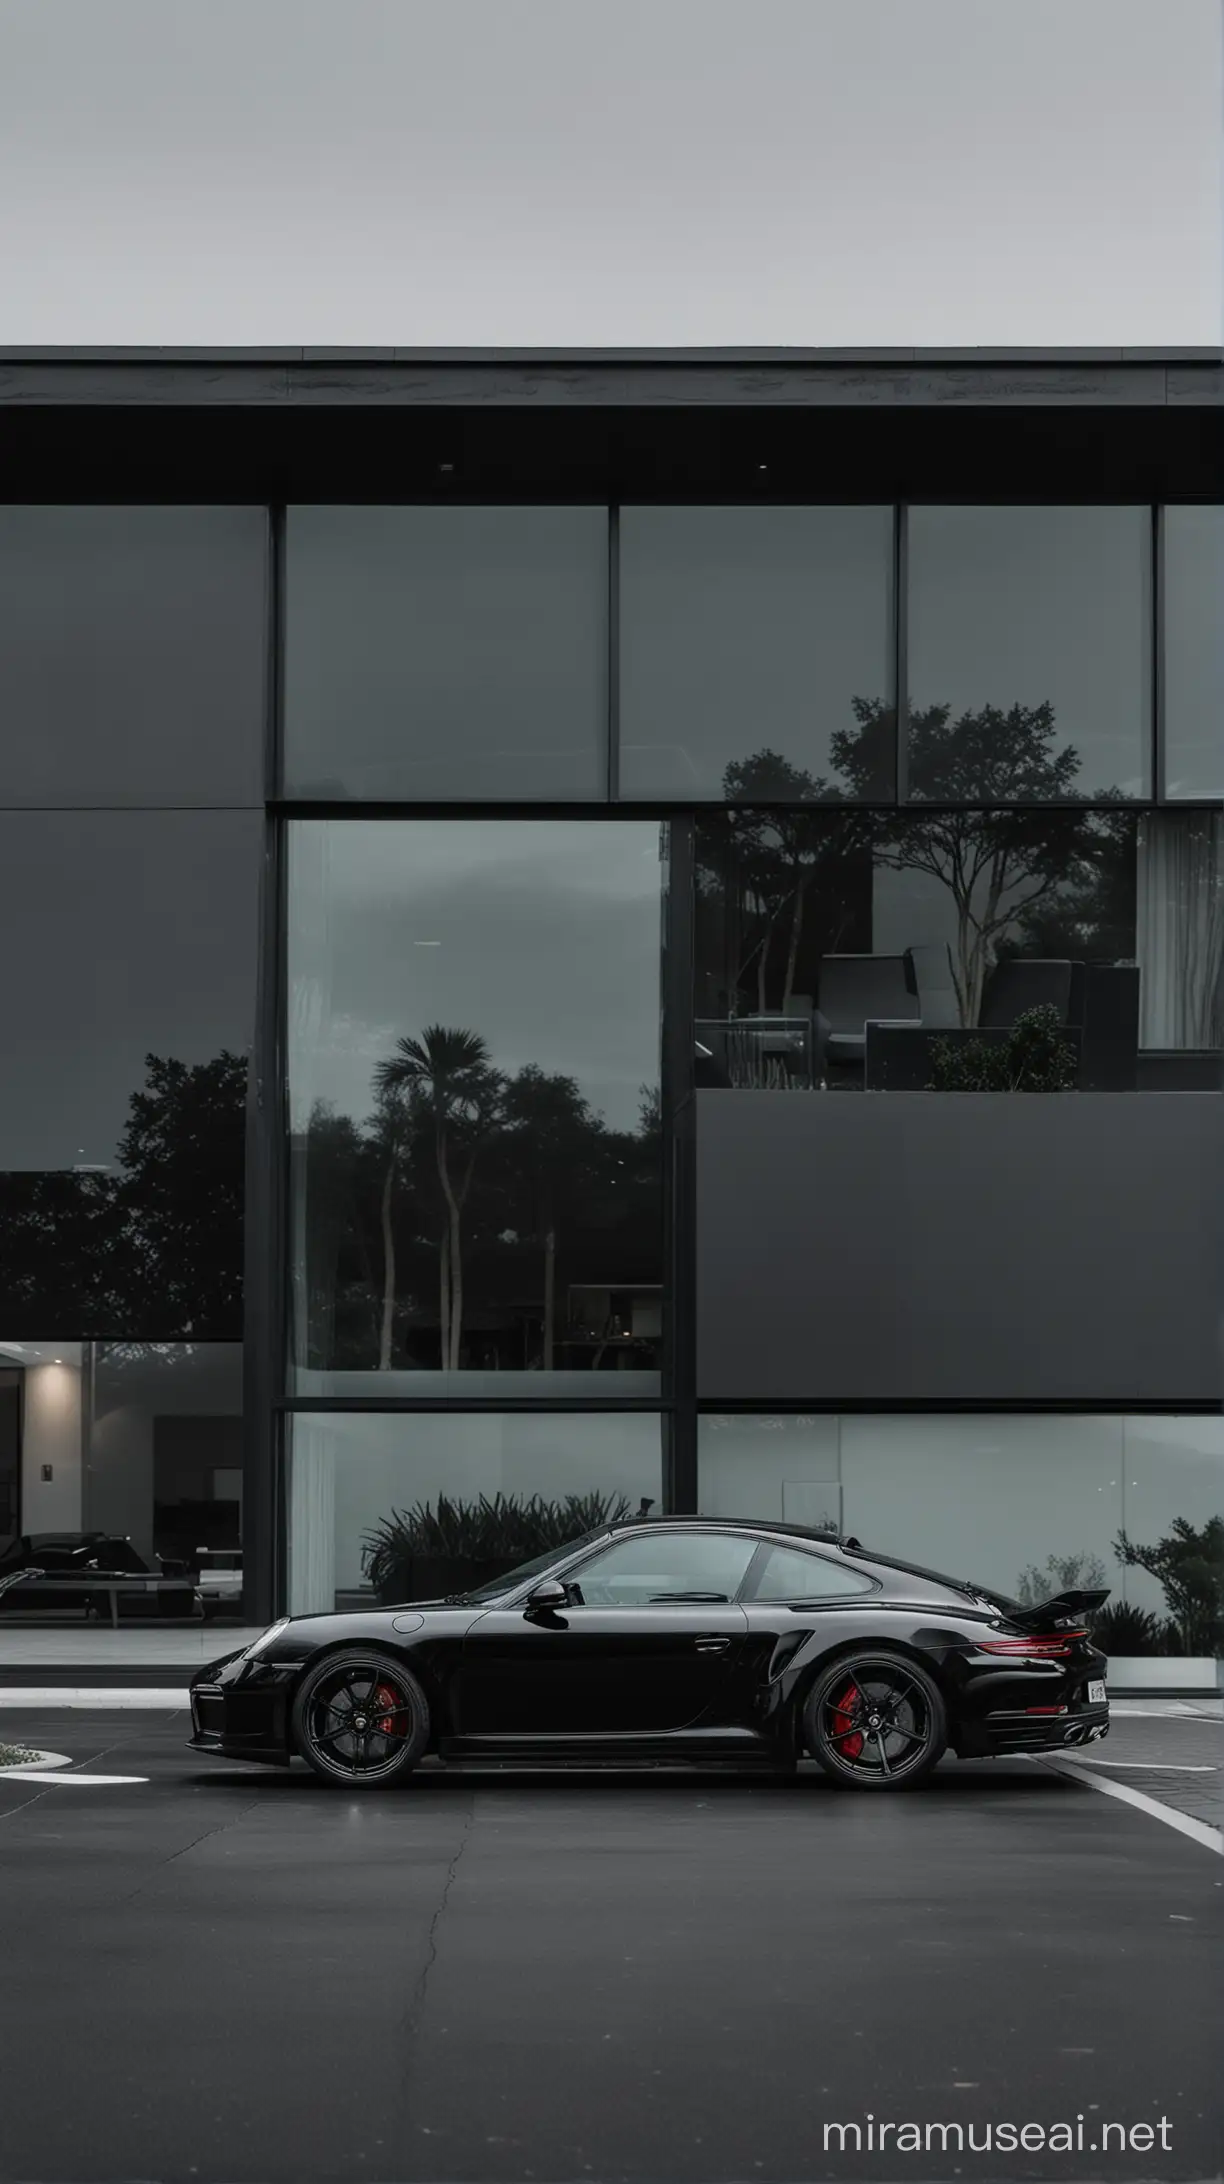 Minimalist Black Porsche Parked Outside GlassWalled Modern Residence